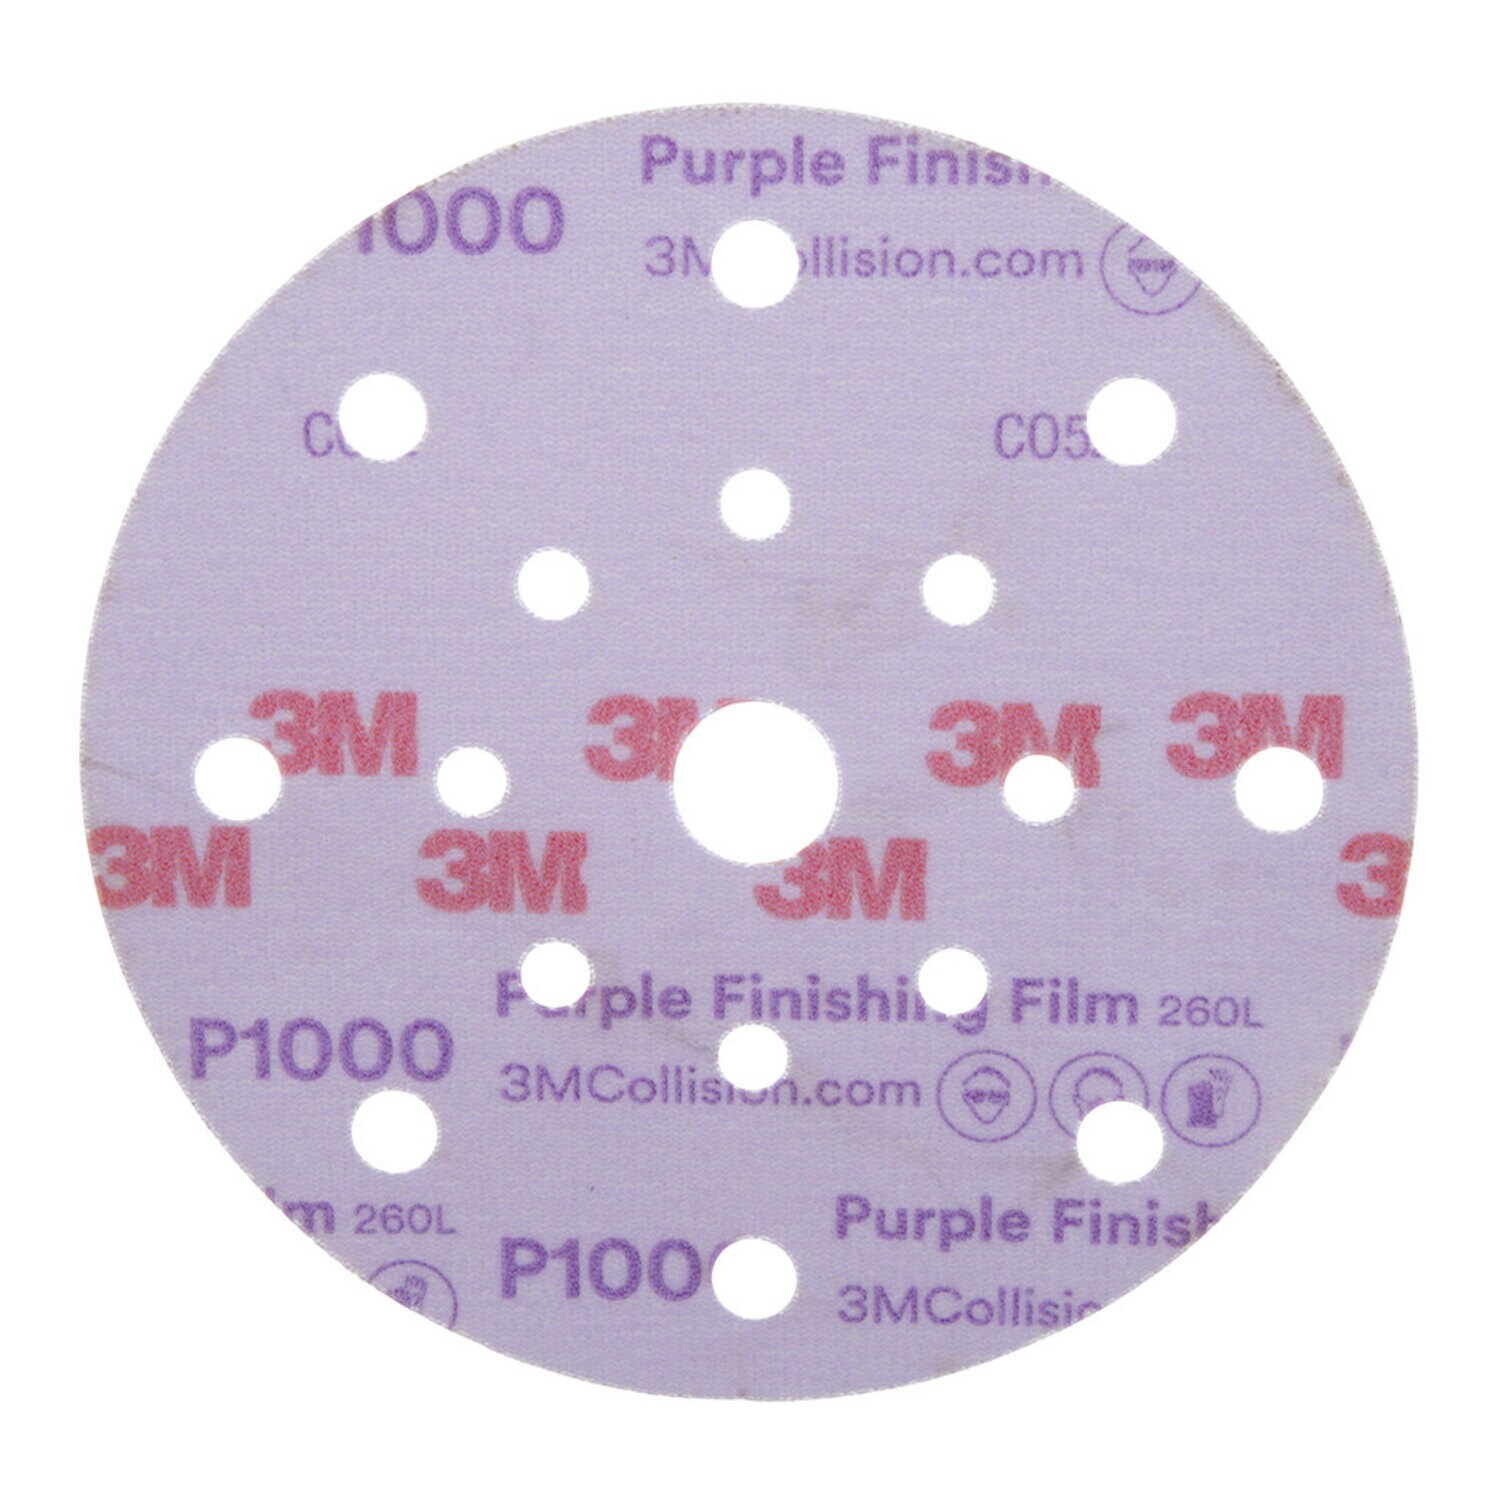 7100122800 - 3M Hookit Purple Finishing Film Abrasive Disc 260L, 34782, 6 in, Dust
Free, P1000, 50 discs per carton, 4 cartons per case